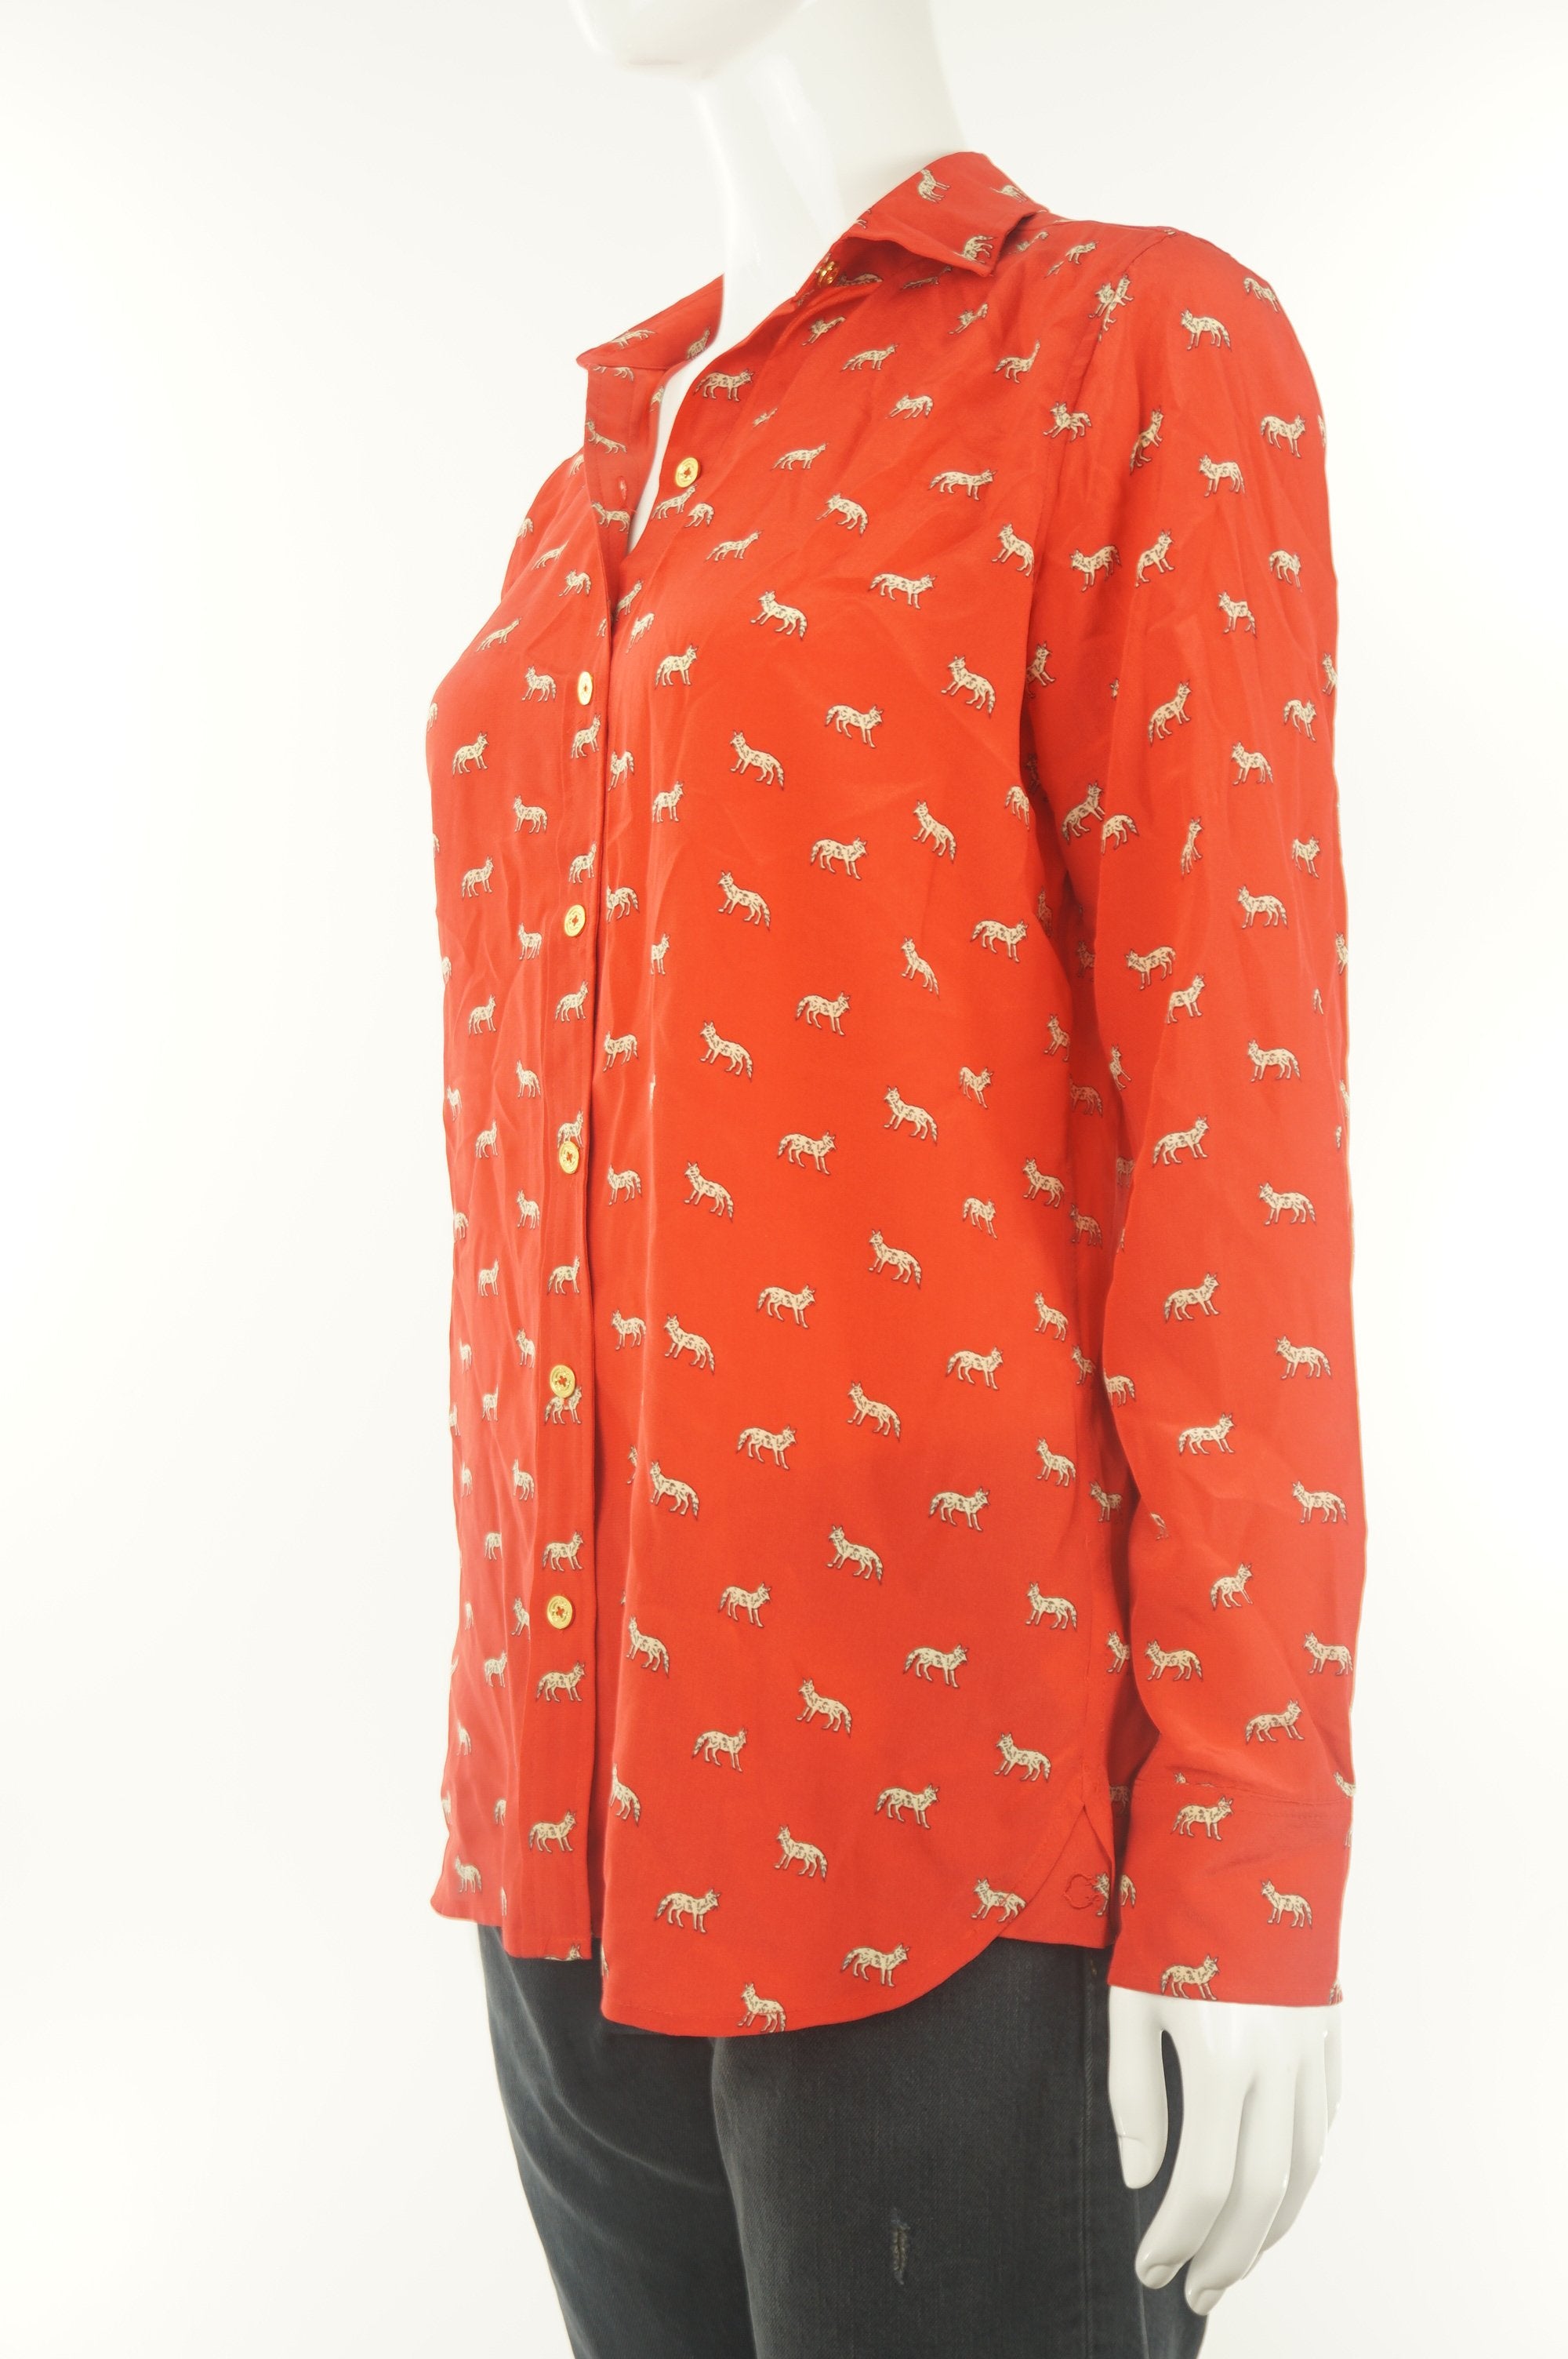 C. Wonder Silk Button Up Shirt Top, Pure silk shirt with cute animal print., Red, 100% silk, 